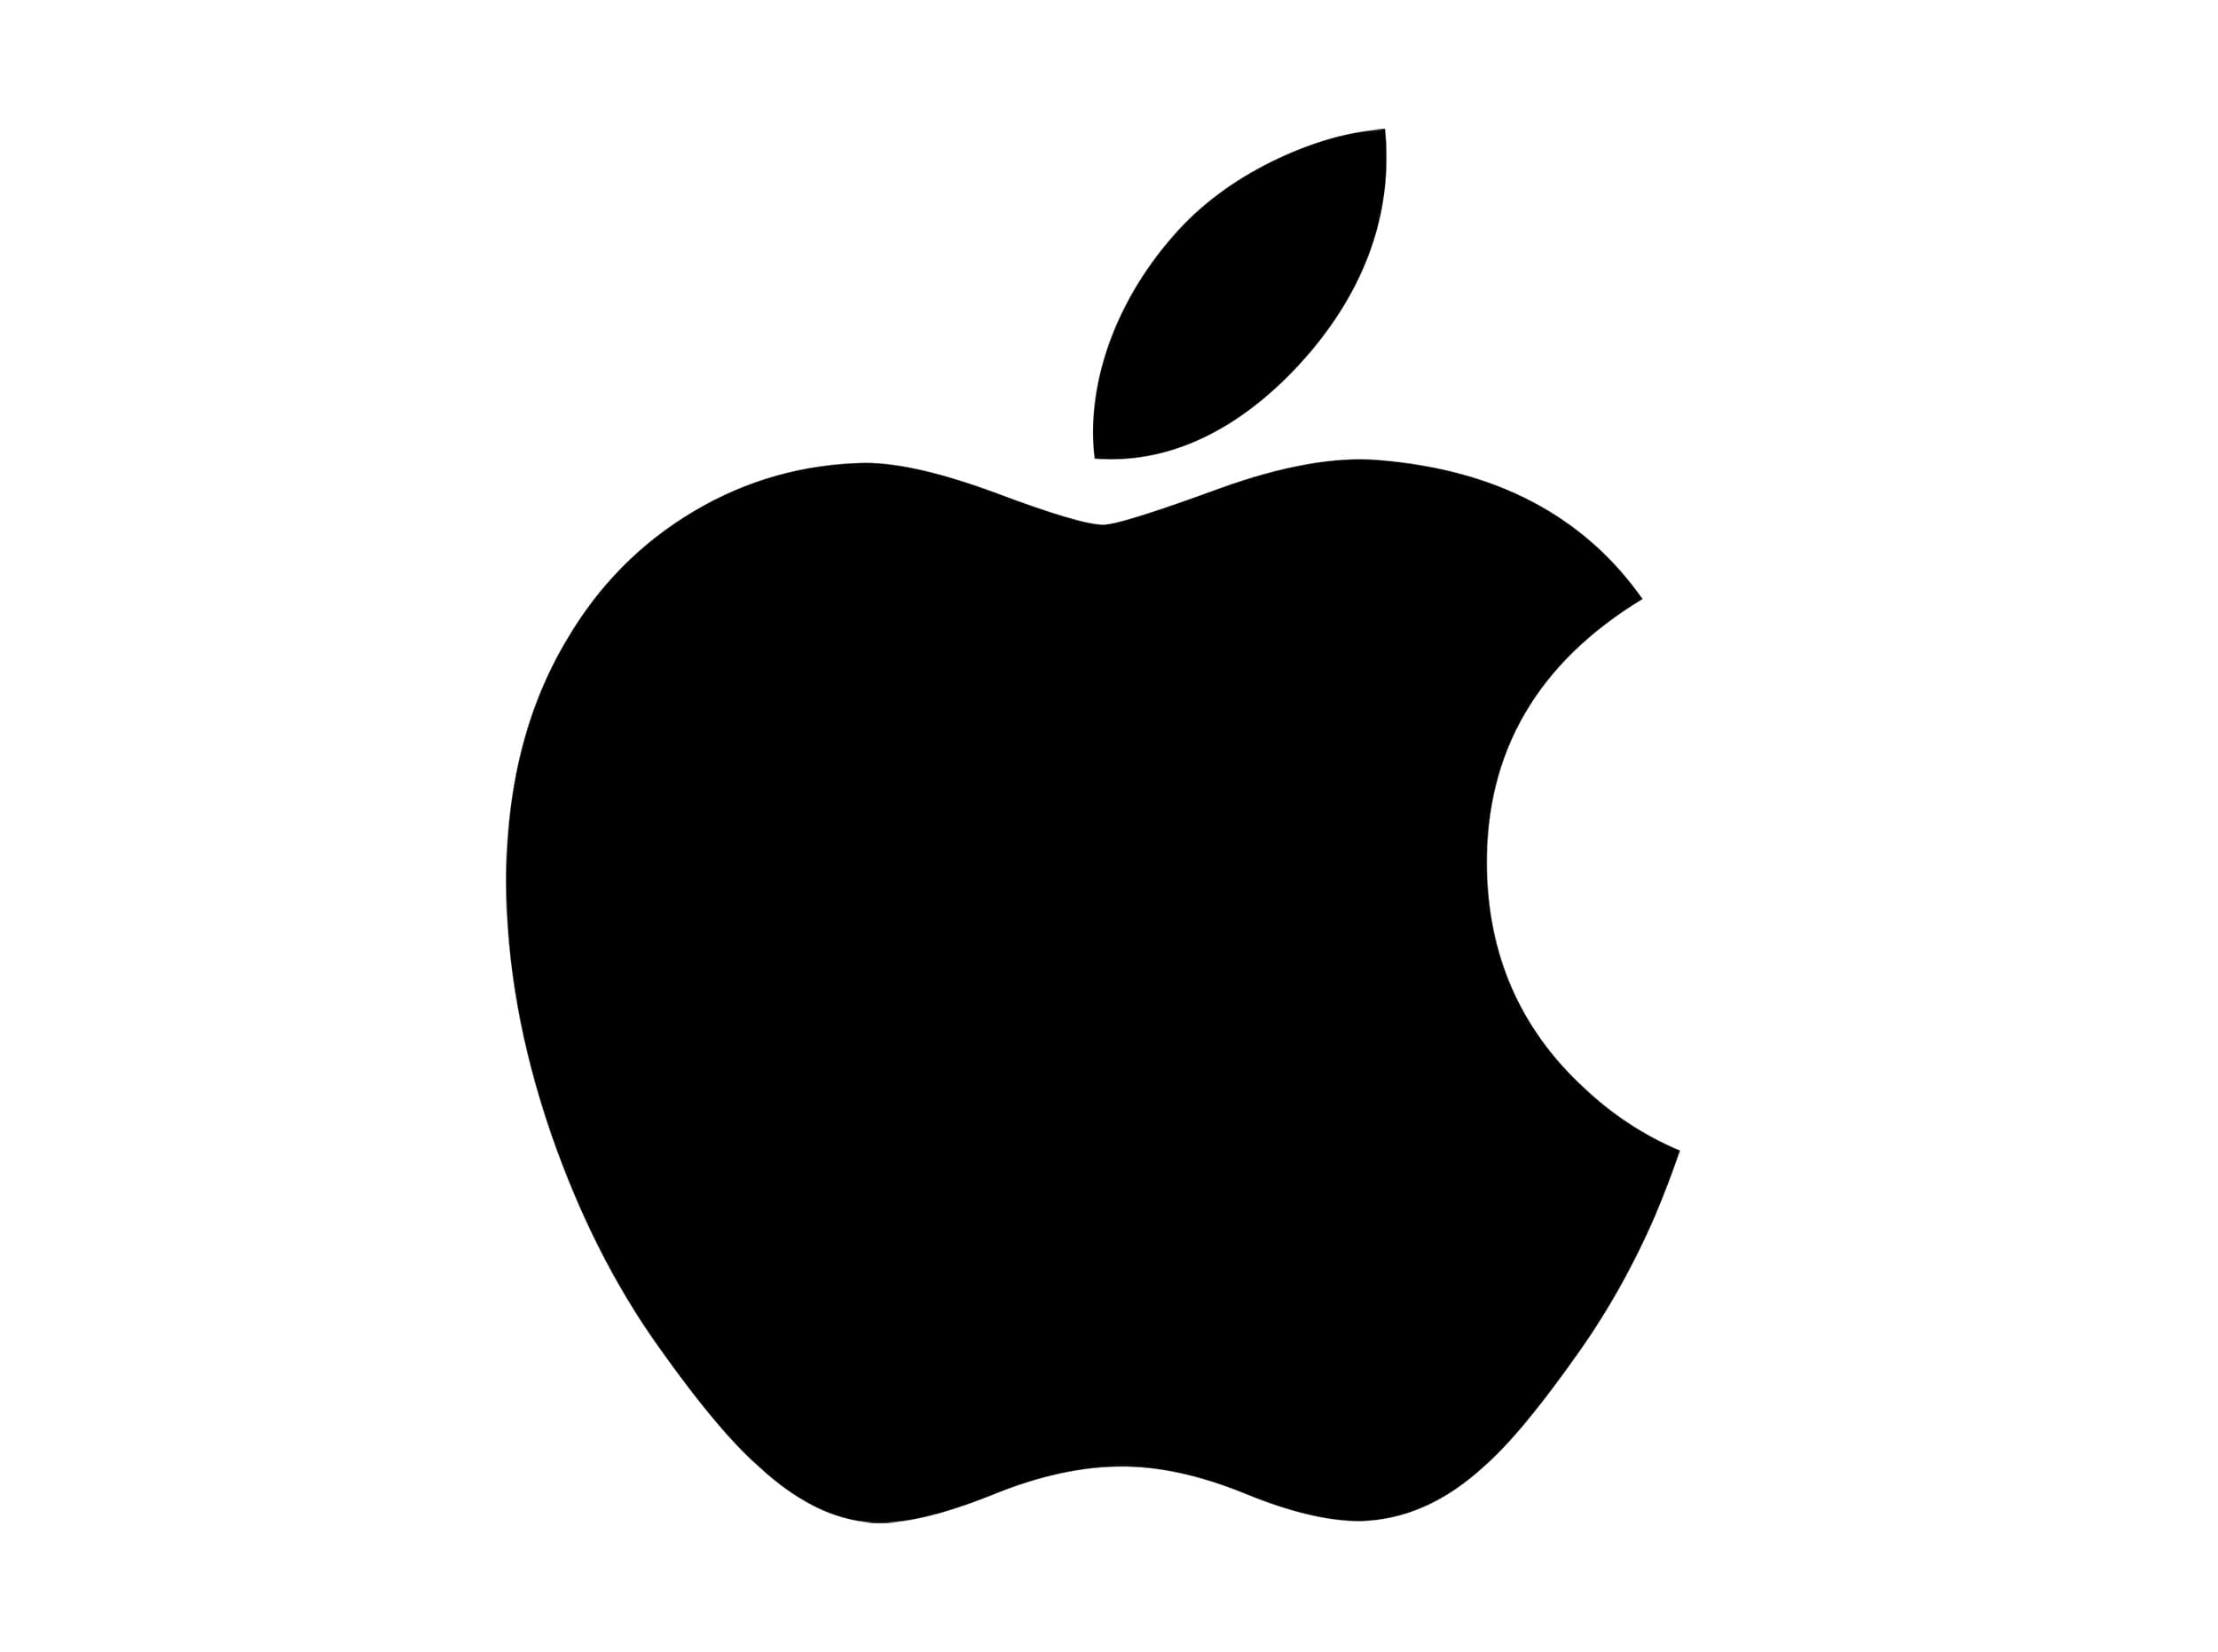 Apple-logo-1.jpg - 24,40 kB